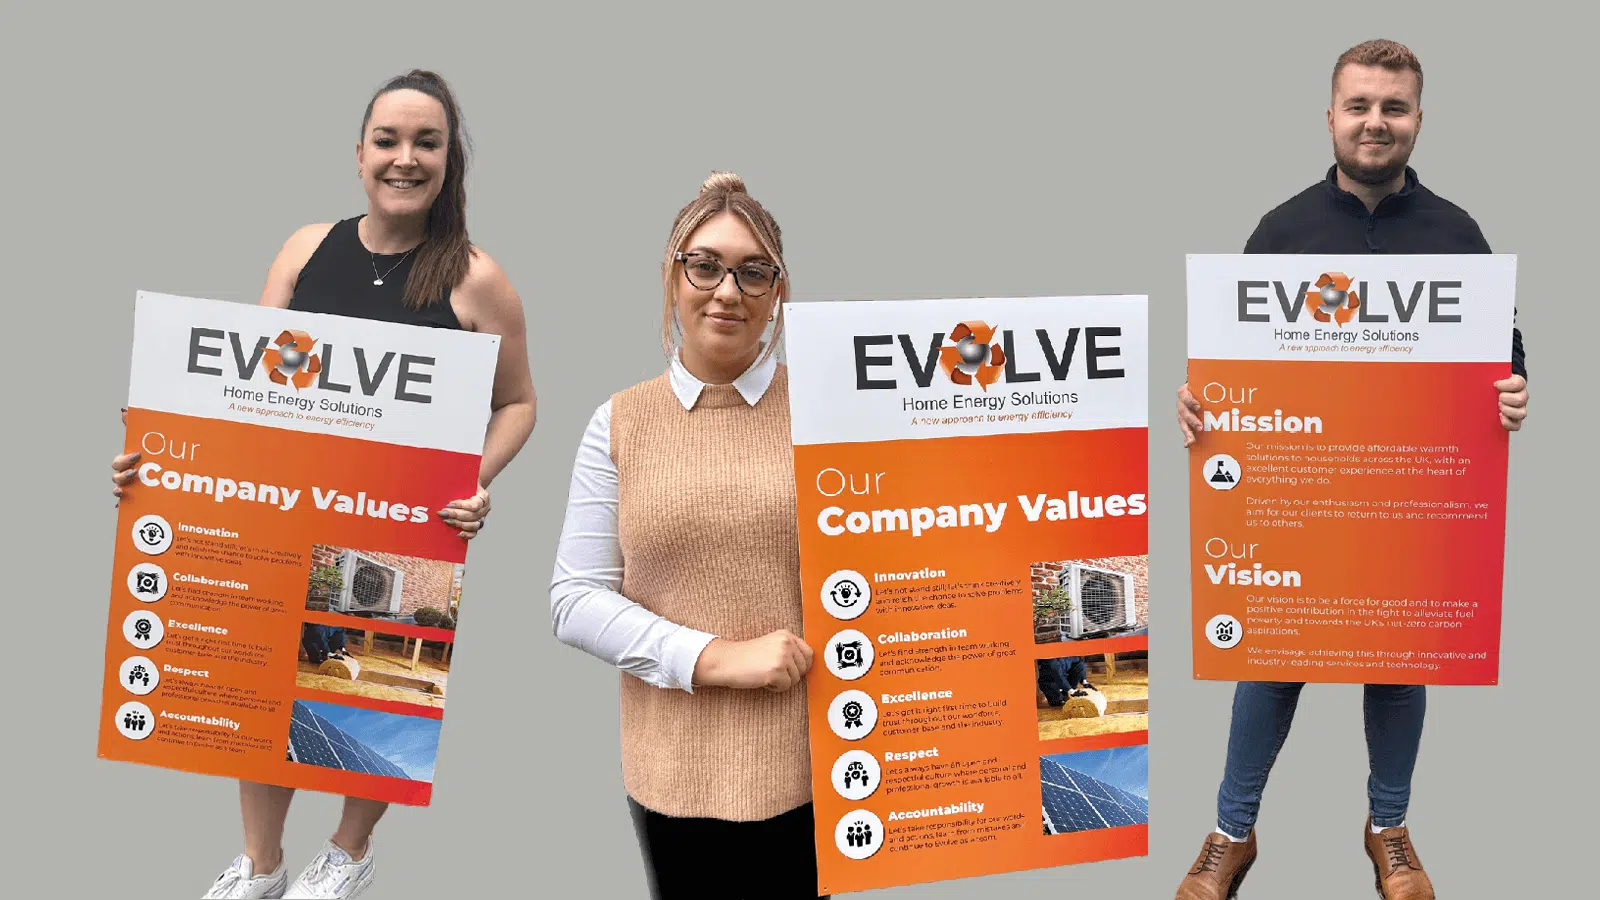 Evolve_values mission & vision